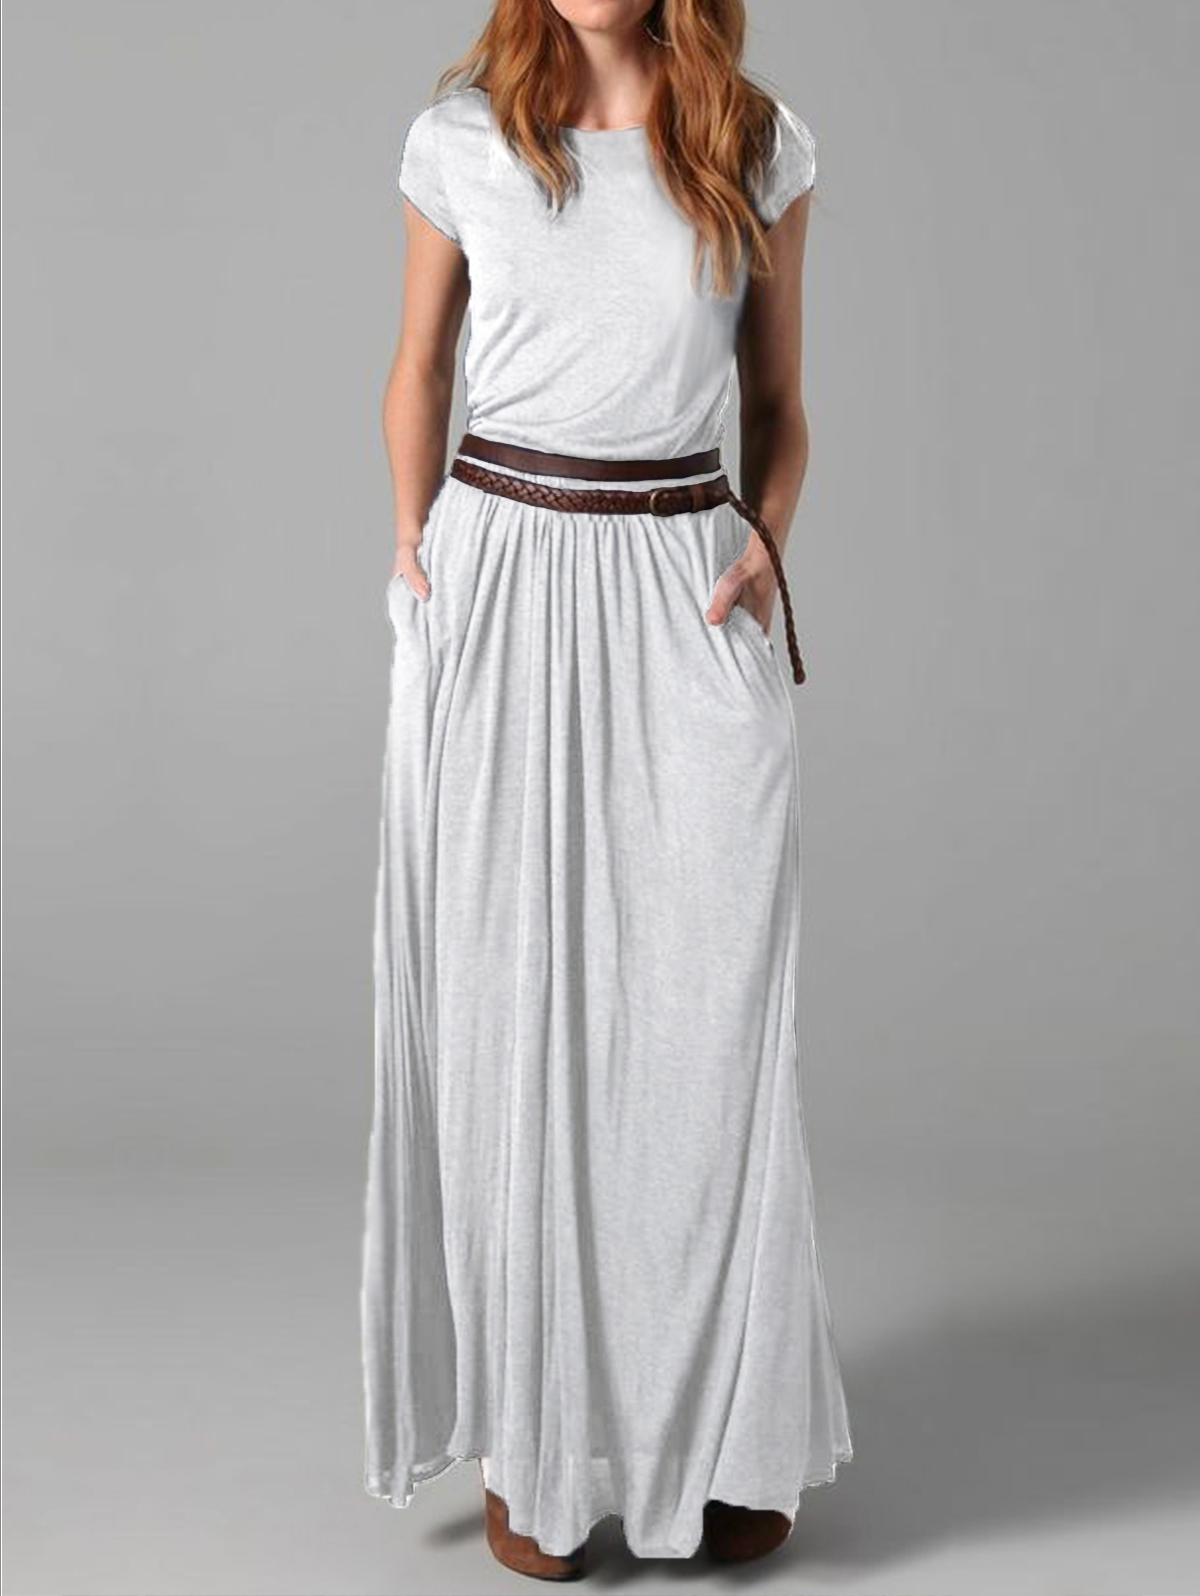 Elegant Summer Short Sleeve Ladies Party Casual Fashion Maxi Dress